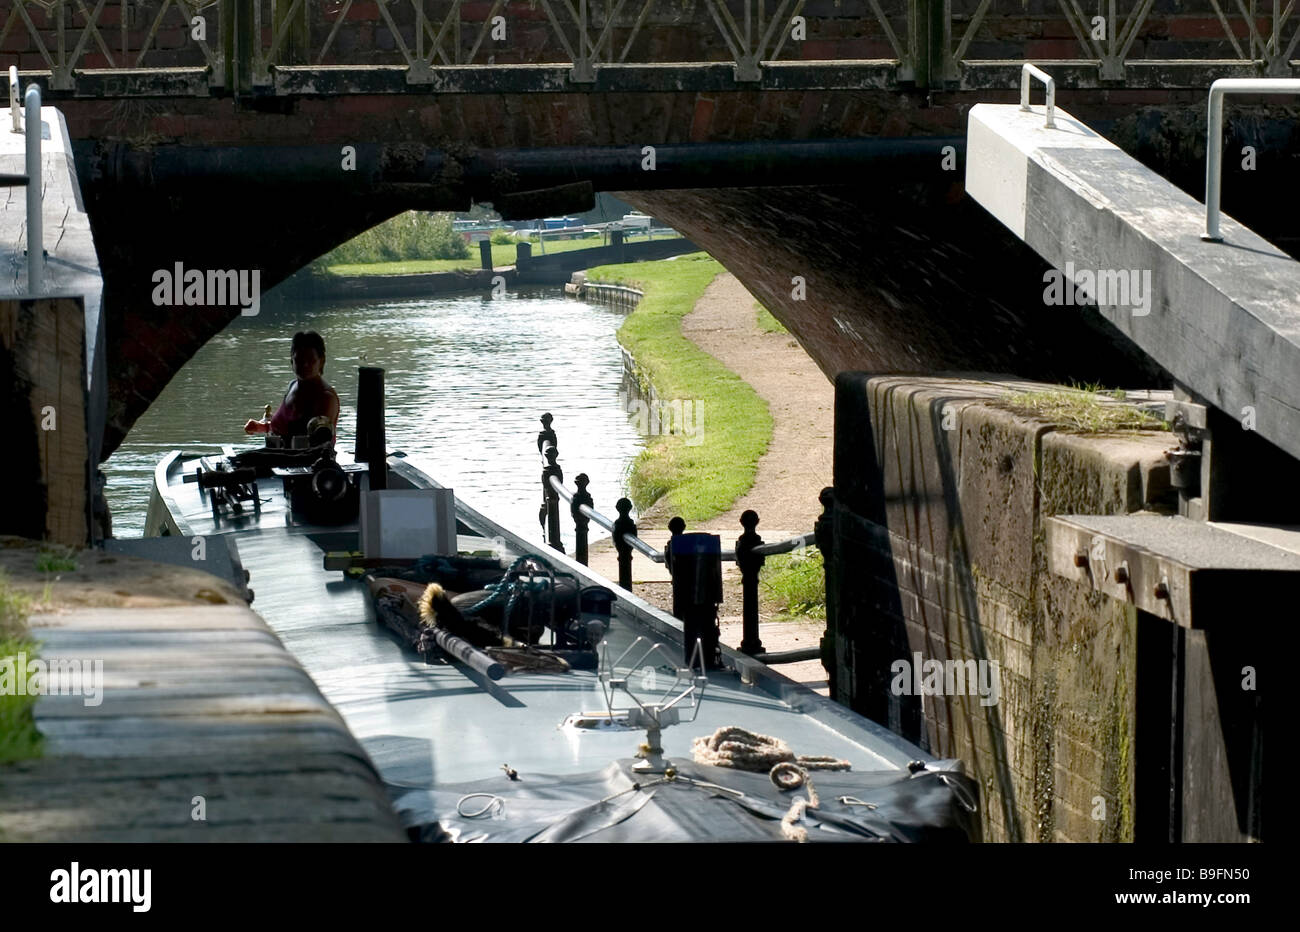 Kanalboot Reisen unter Brücke am Fluss Stockfoto